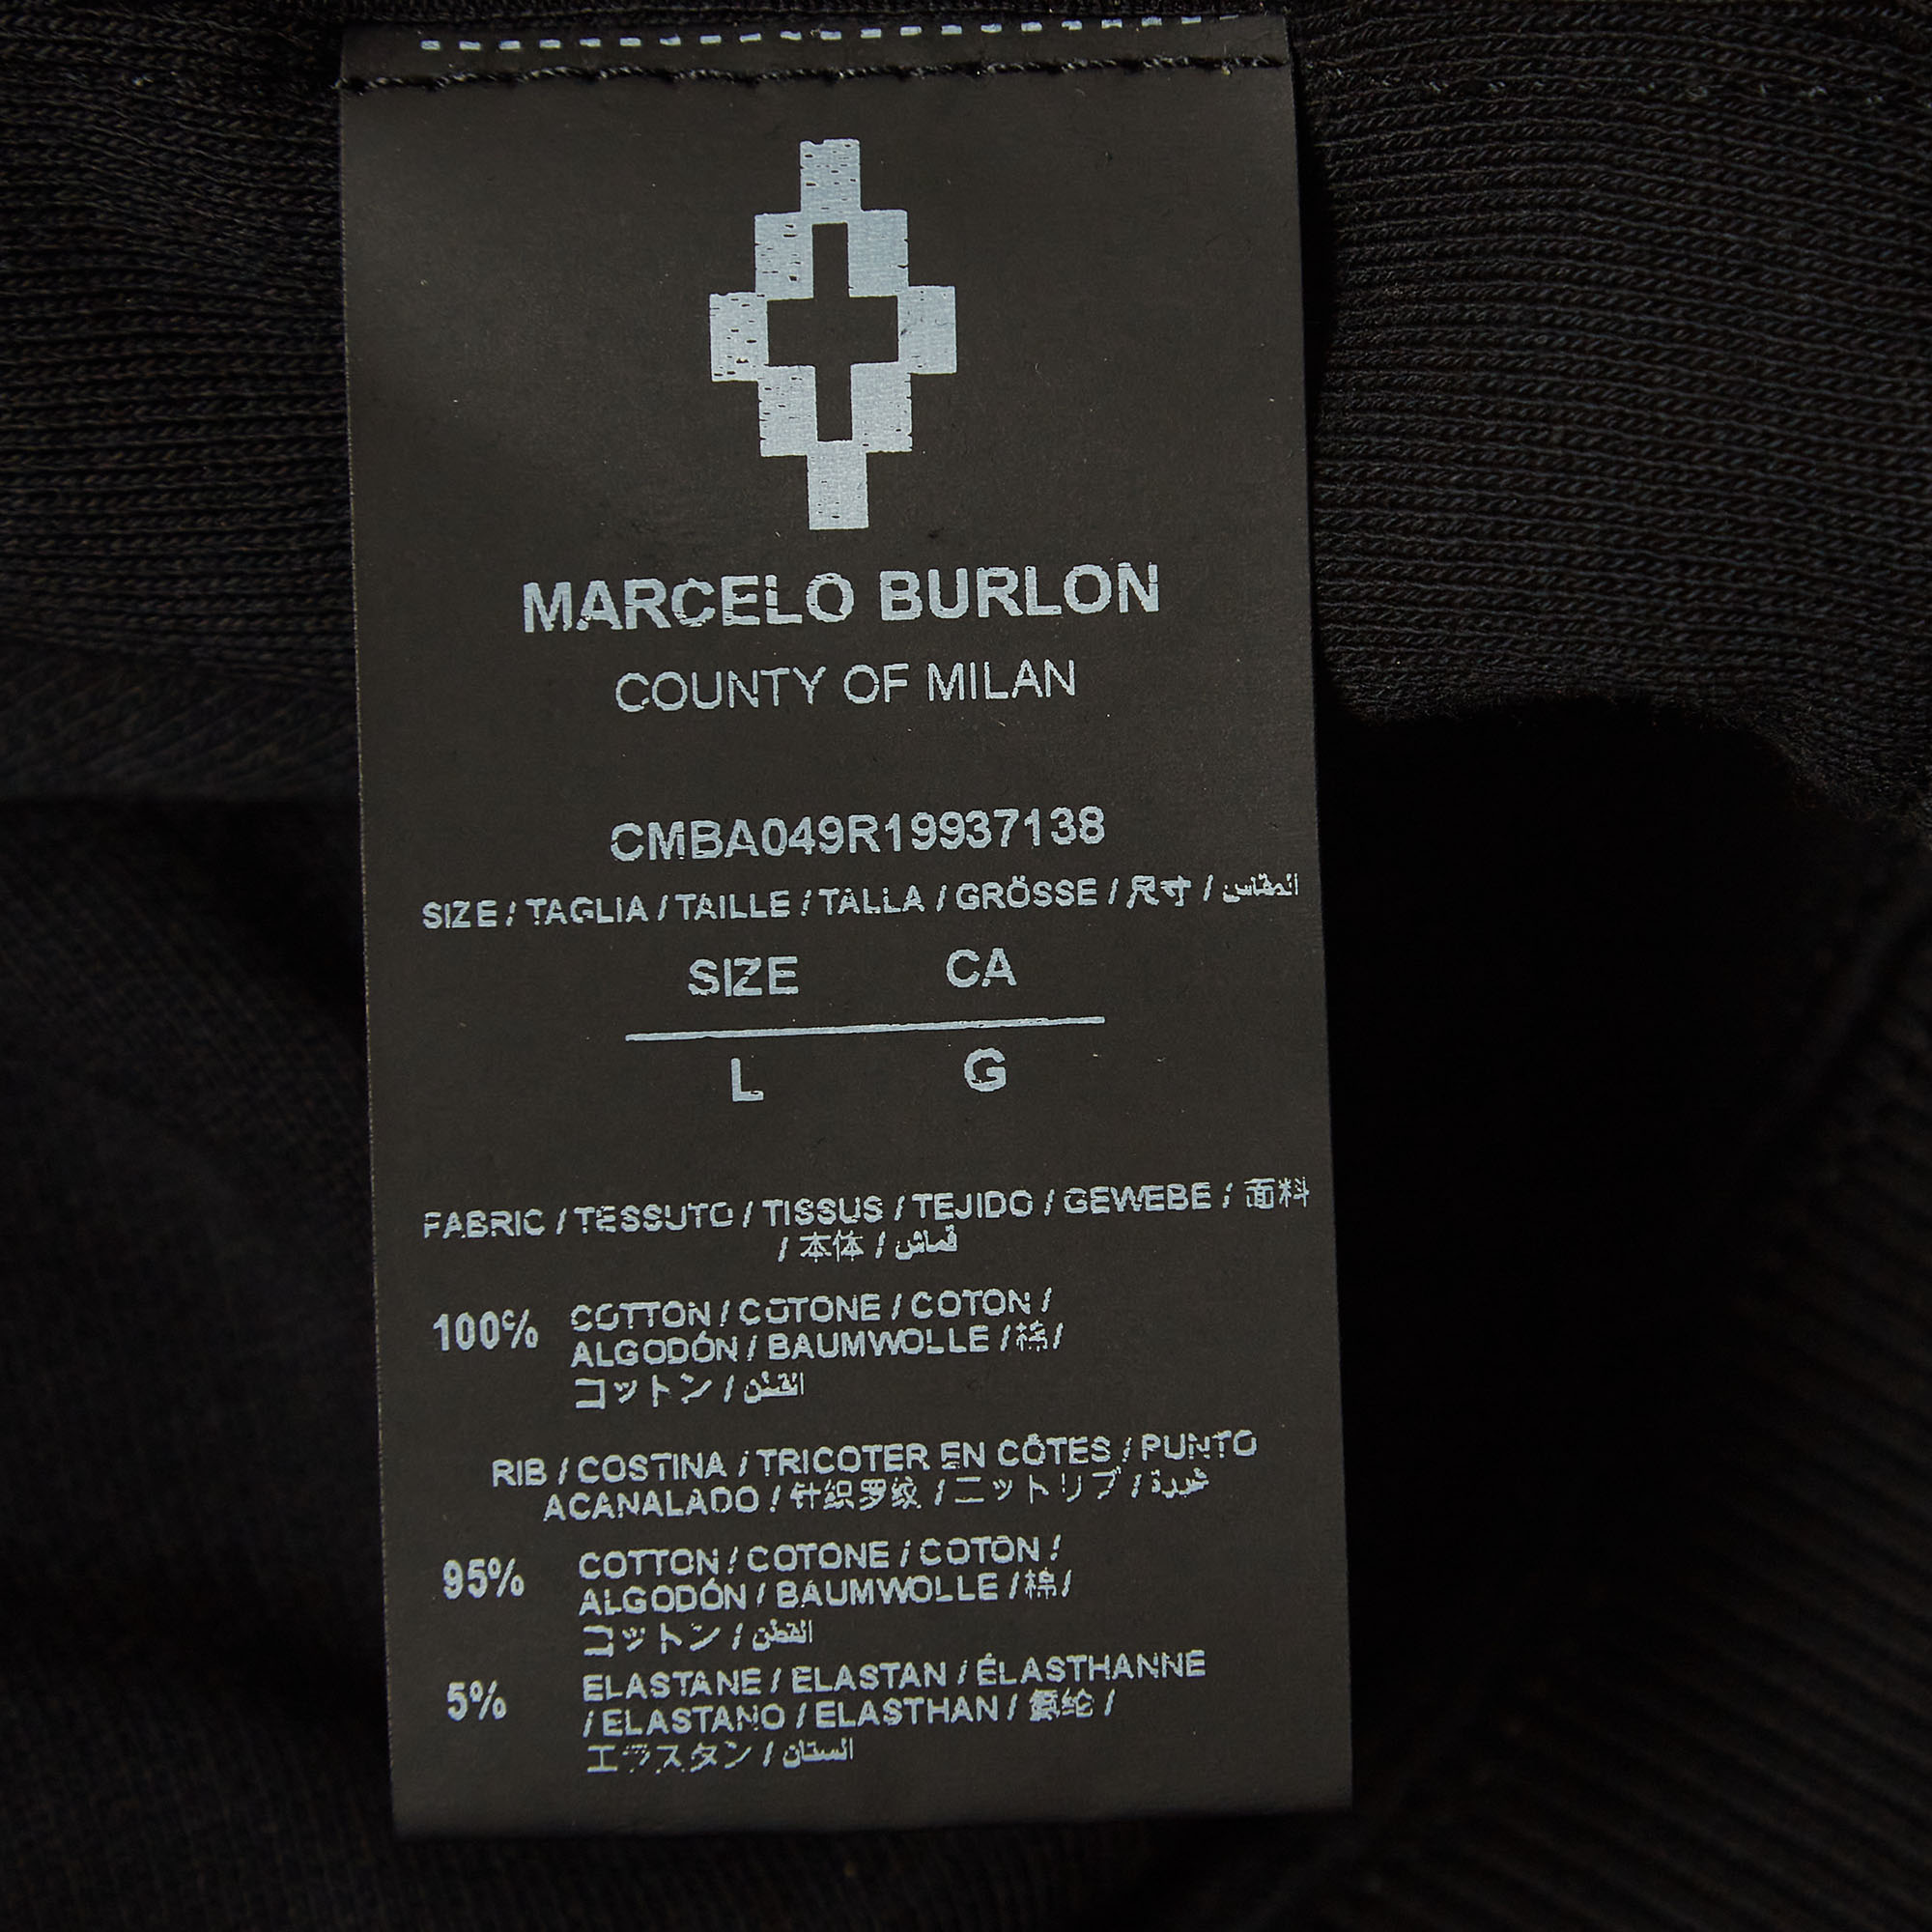 Marcelo Burlon X Muhammad Ali Black Printed Cotton Sweatshirt L